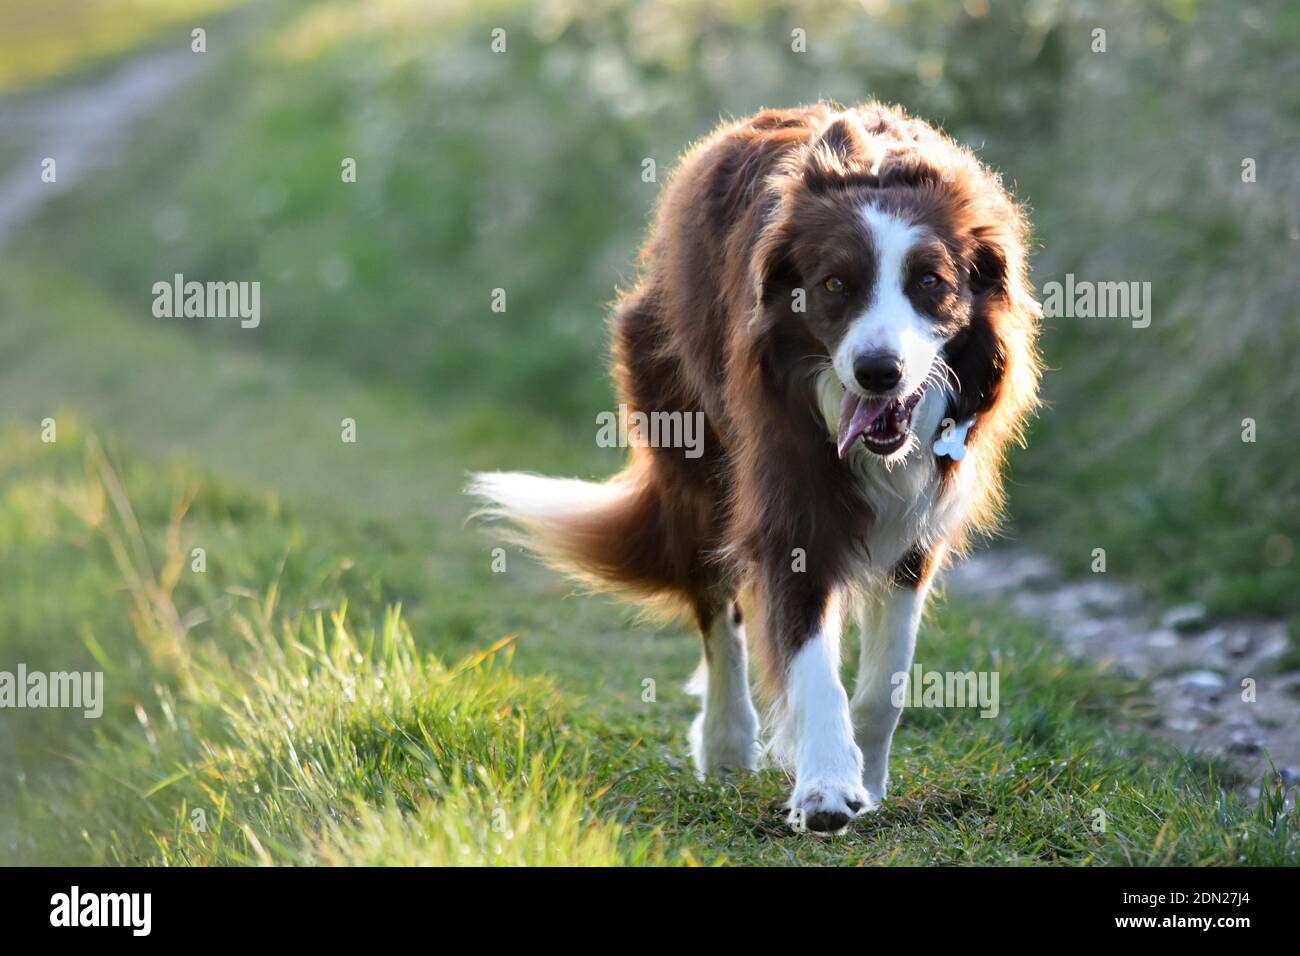 English Shepherd dog walking on a path towards the camera Stock Photo